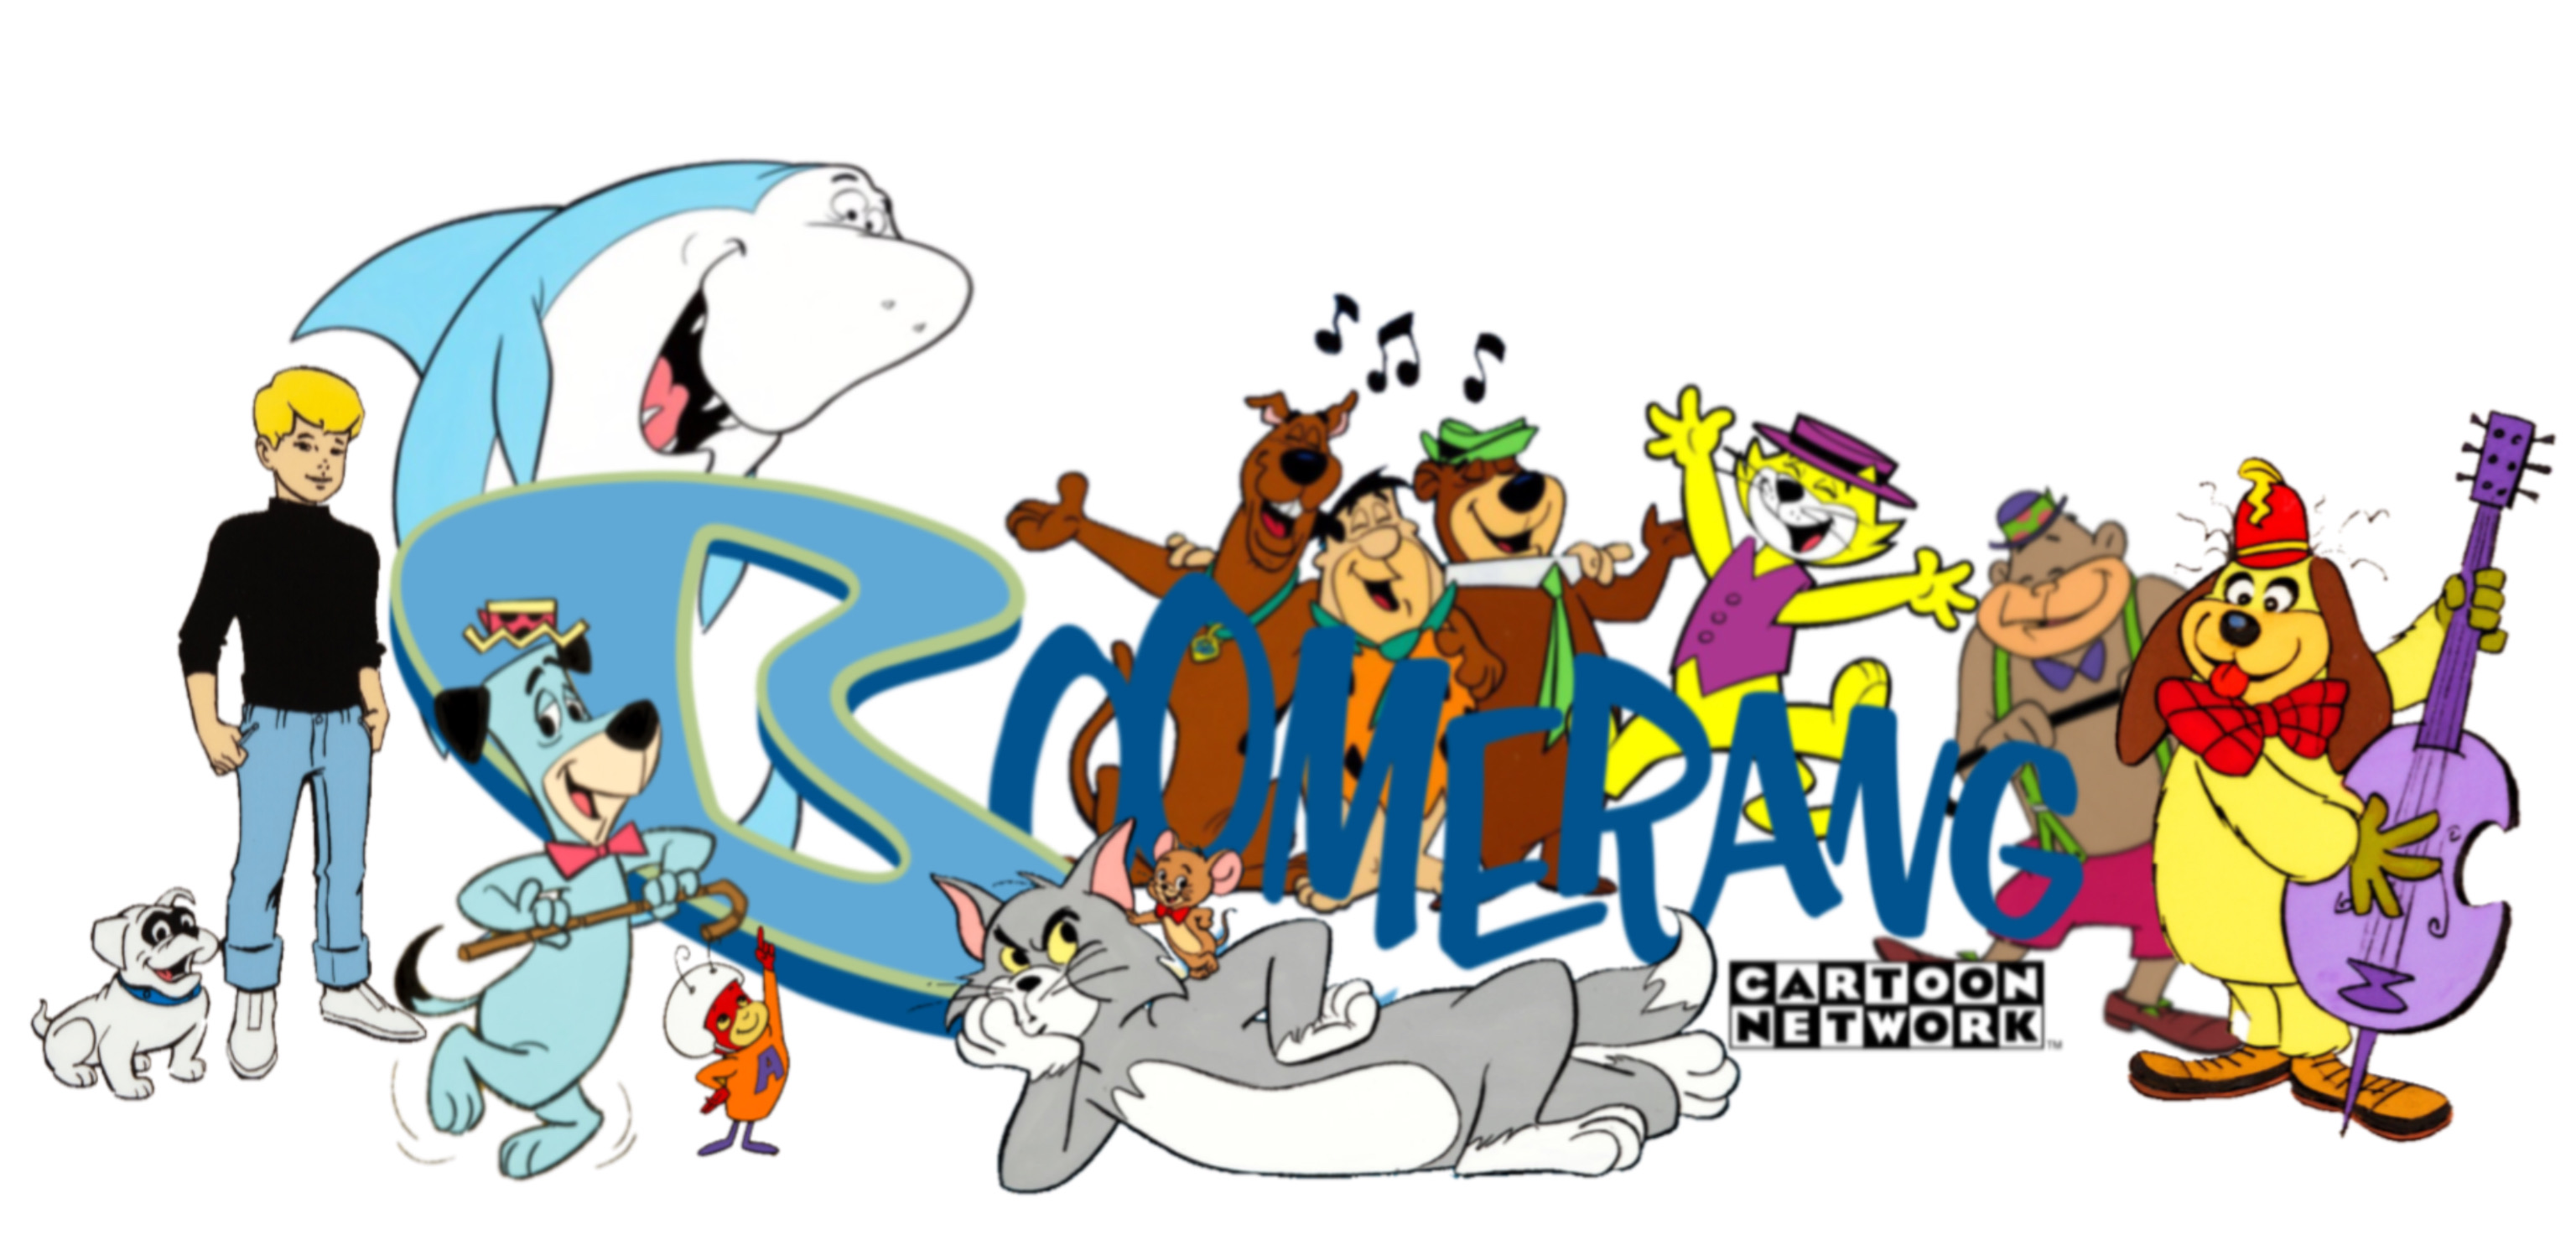 Boomerang from Cartoon Network logo by mcdnalds2016 on DeviantArt